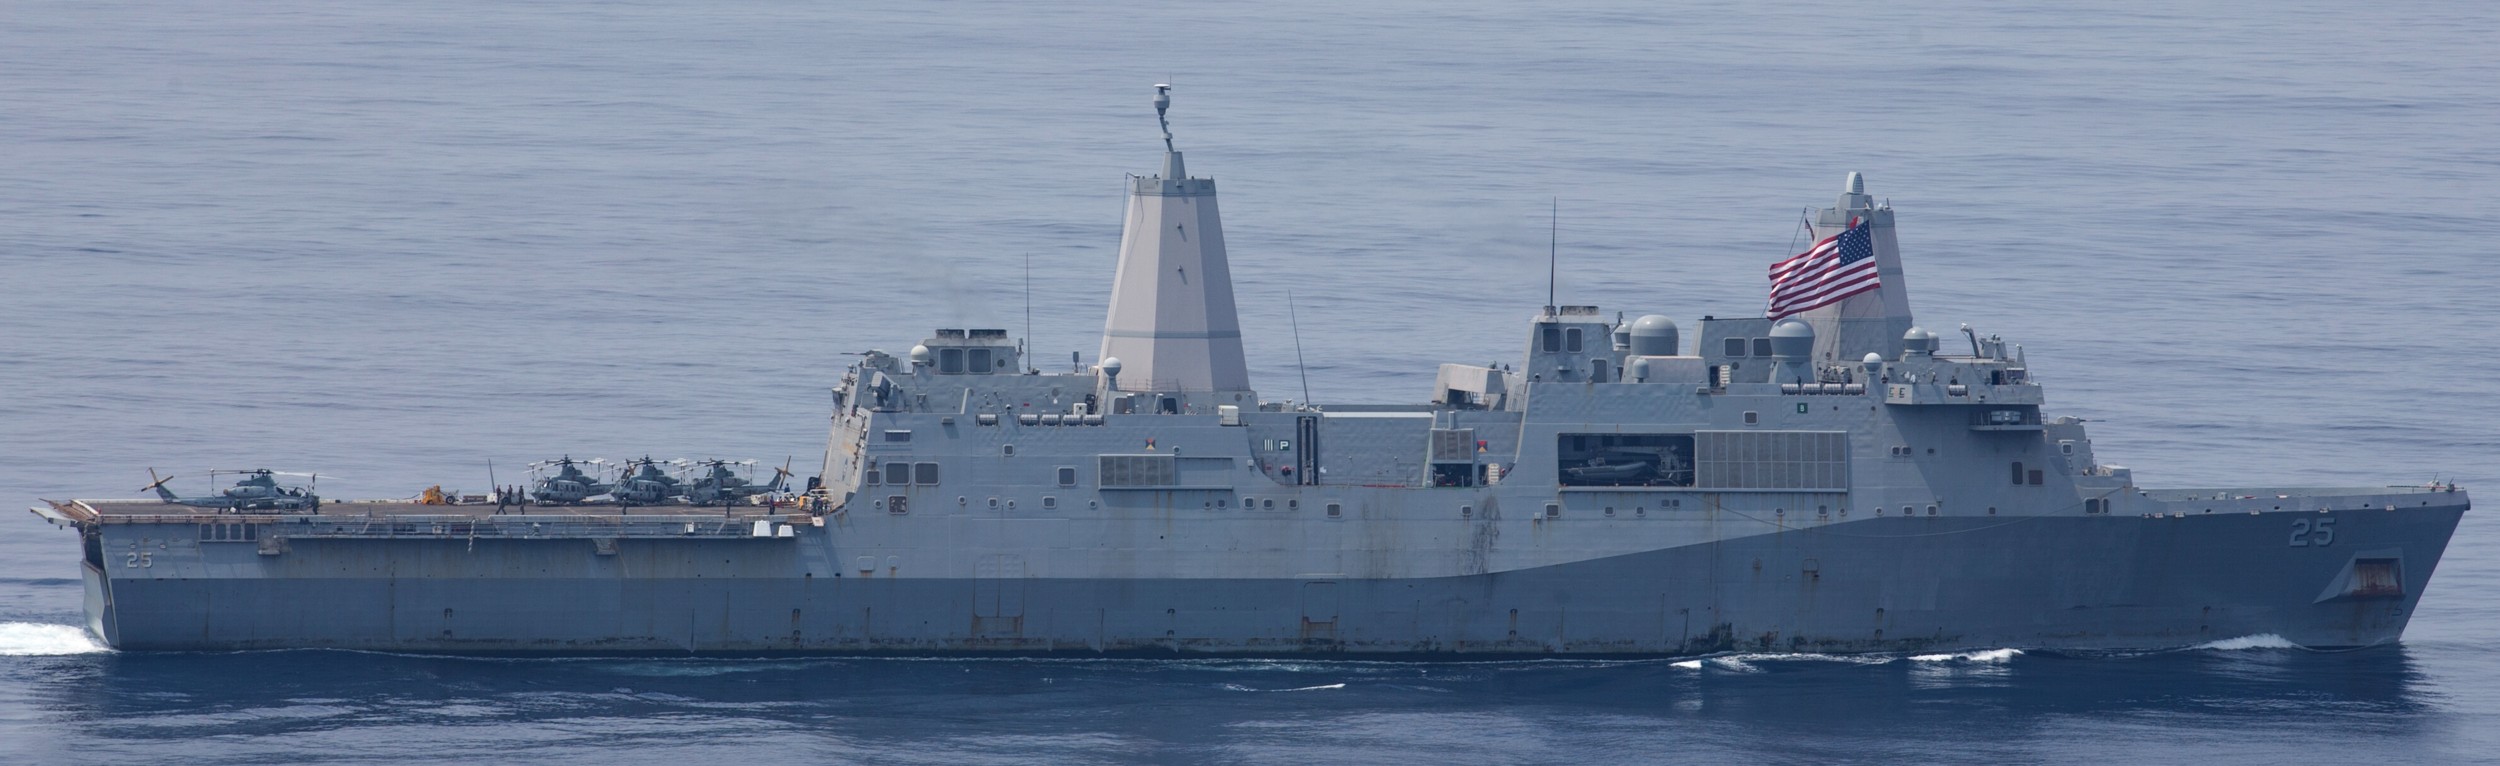 lpd-25 uss somerset san antonio class amphibious transport dock landing ship us navy 83